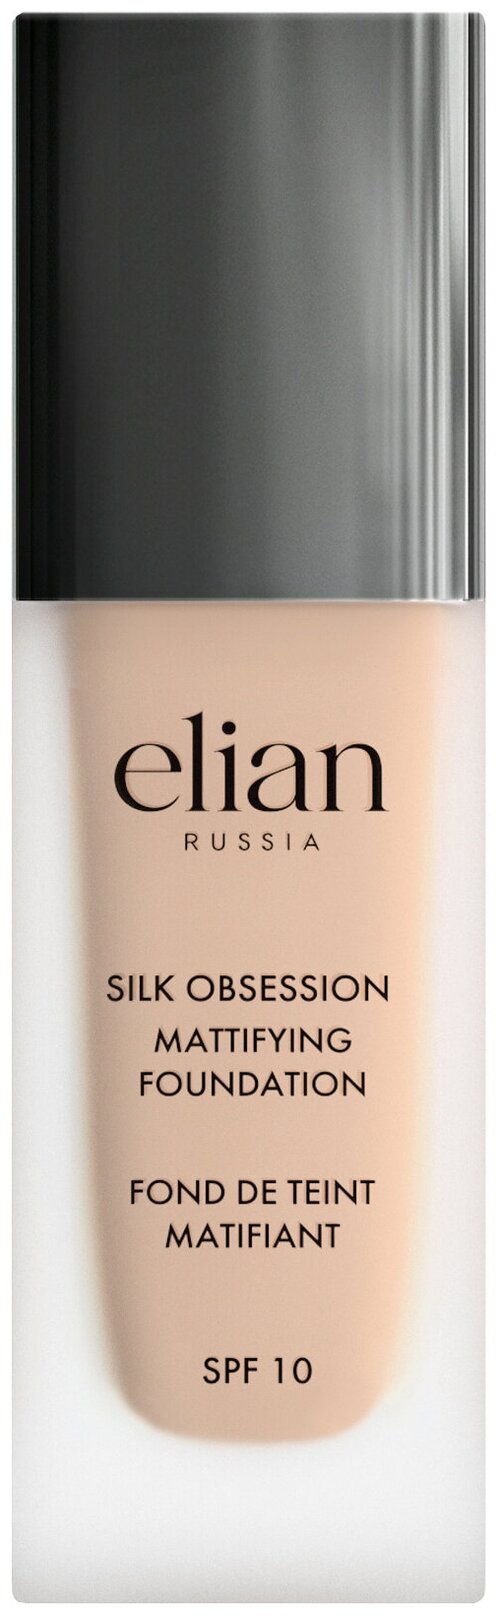 Elian Russia Тональный крем Silk Obsession Mattifying Foundation, 35 мл, оттенок: 25 Almond, 1 шт.